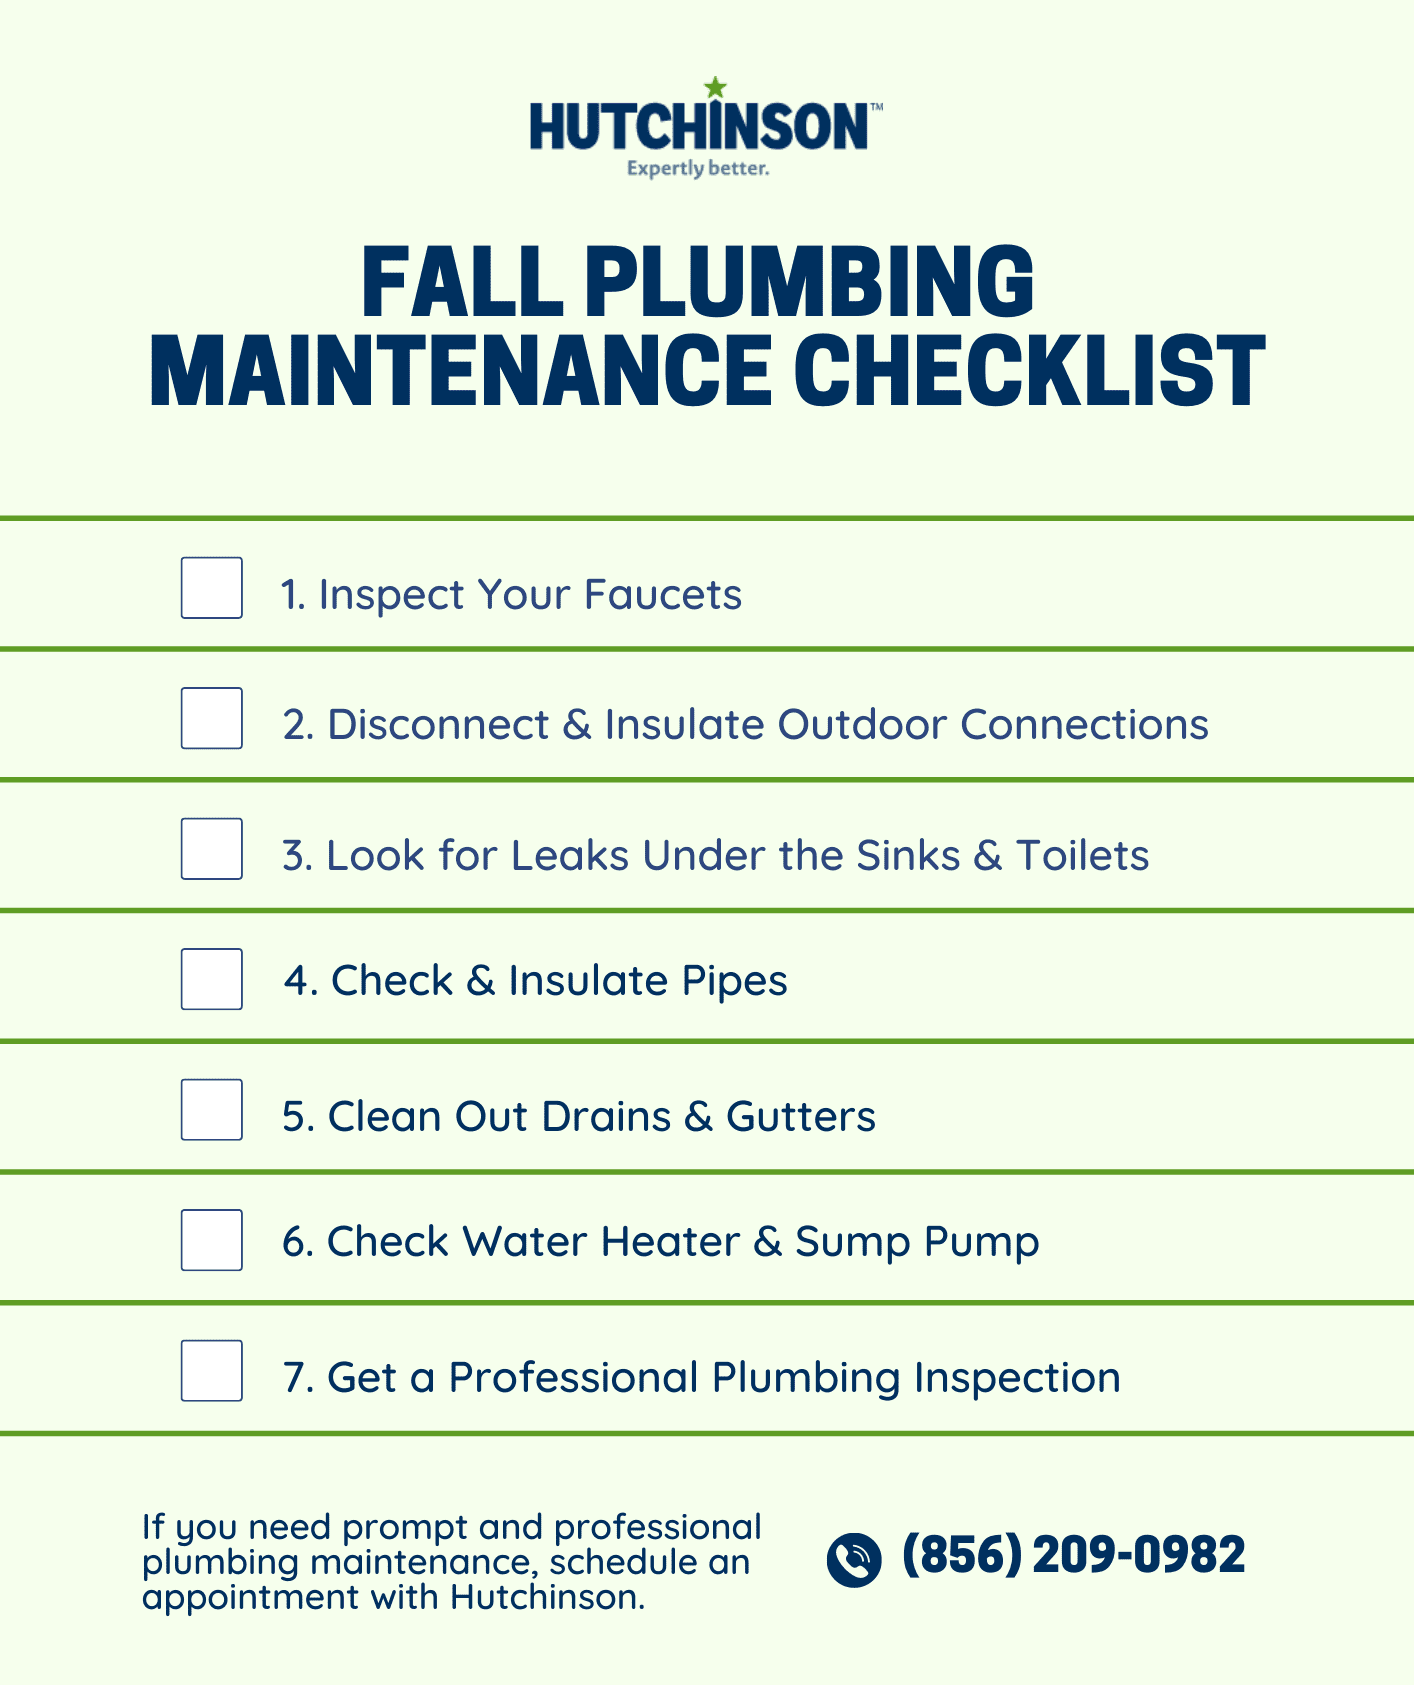 Hutchinson’s Fall Plumbing Maintenance Checklist 2022